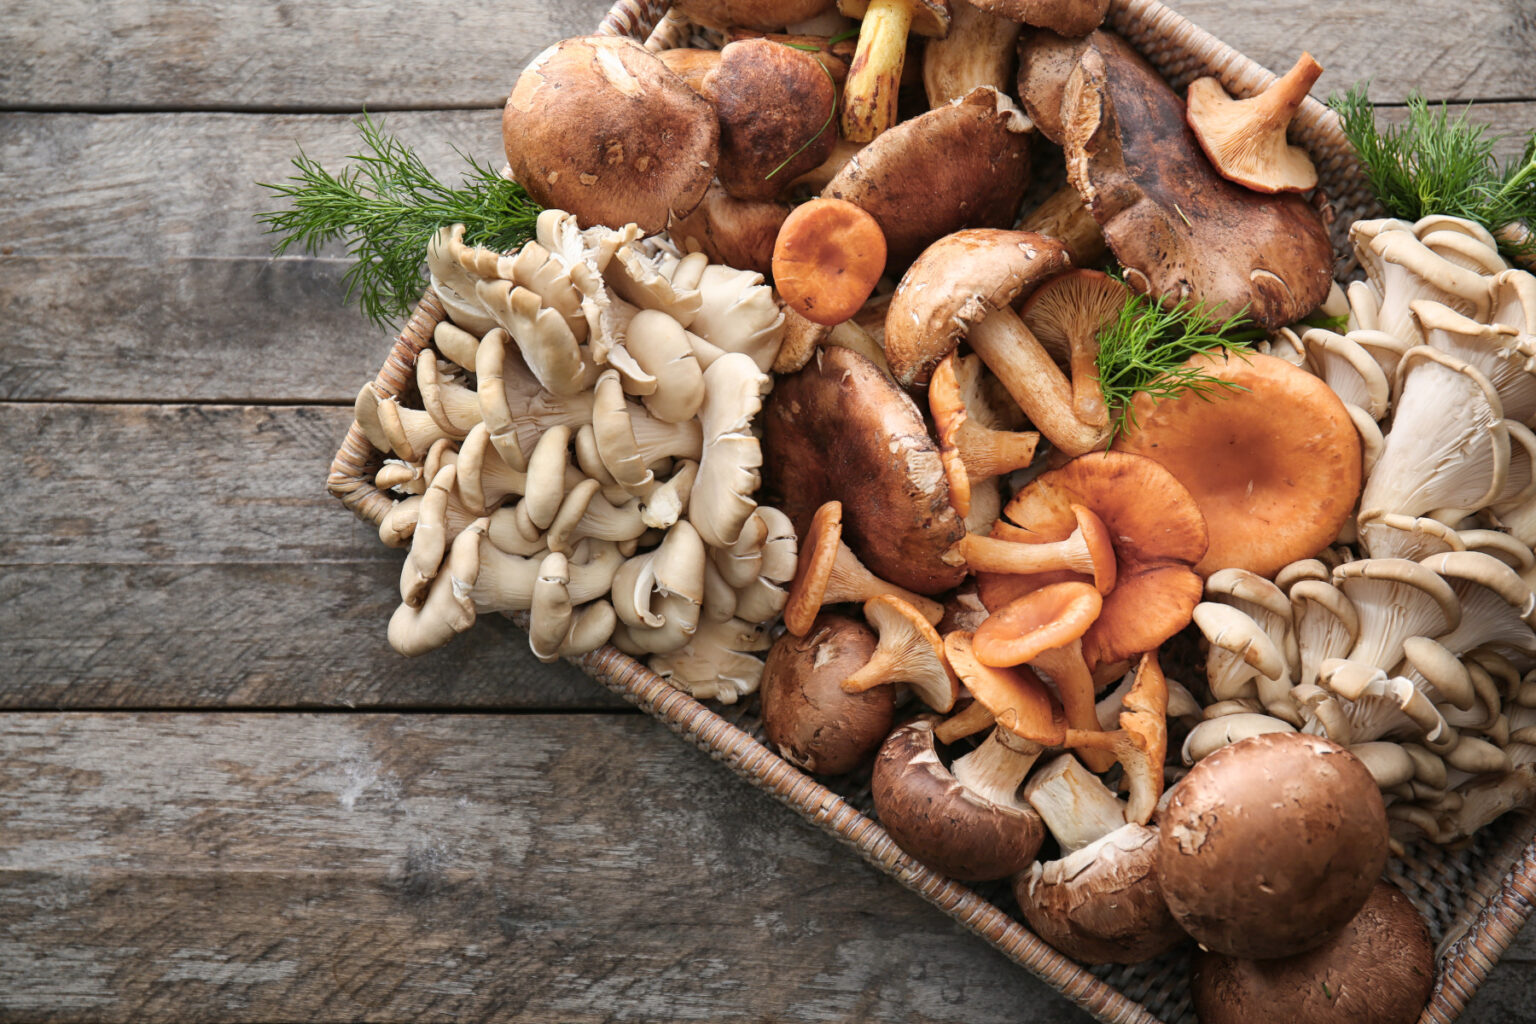 research paper on edible mushroom